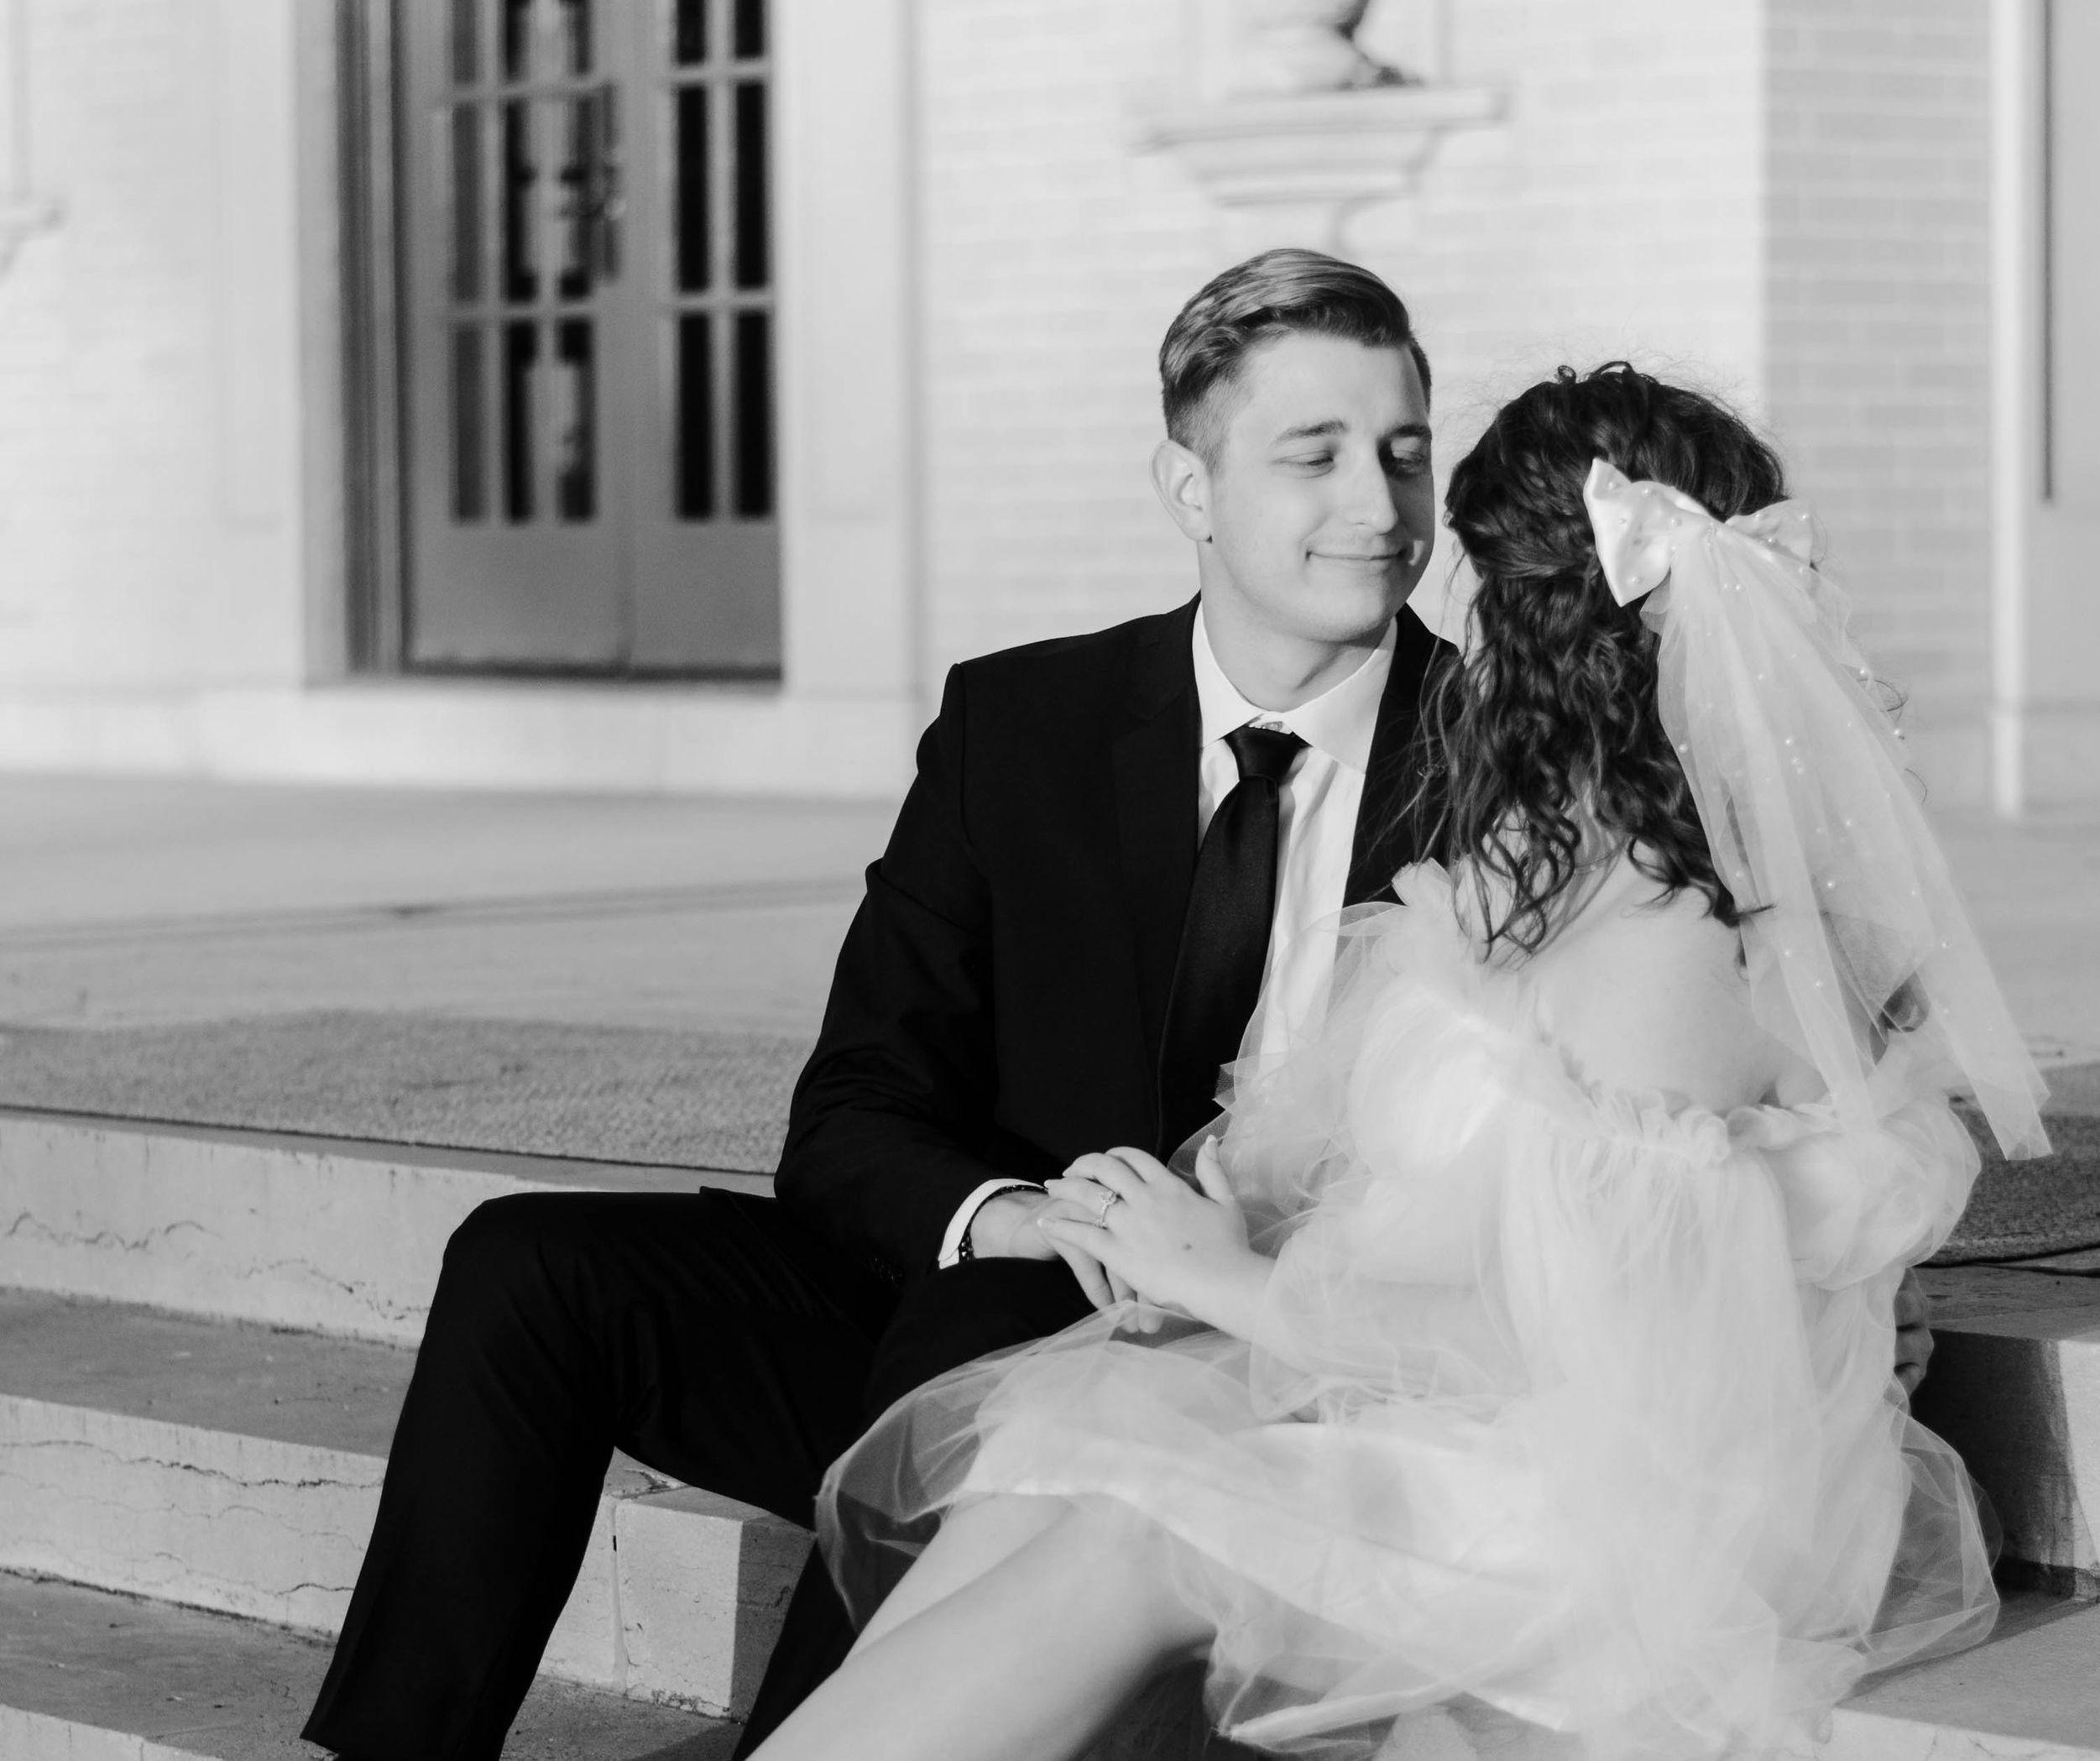 The Wedding Website of Ashlynn Kinnett and Cyrus Johnson